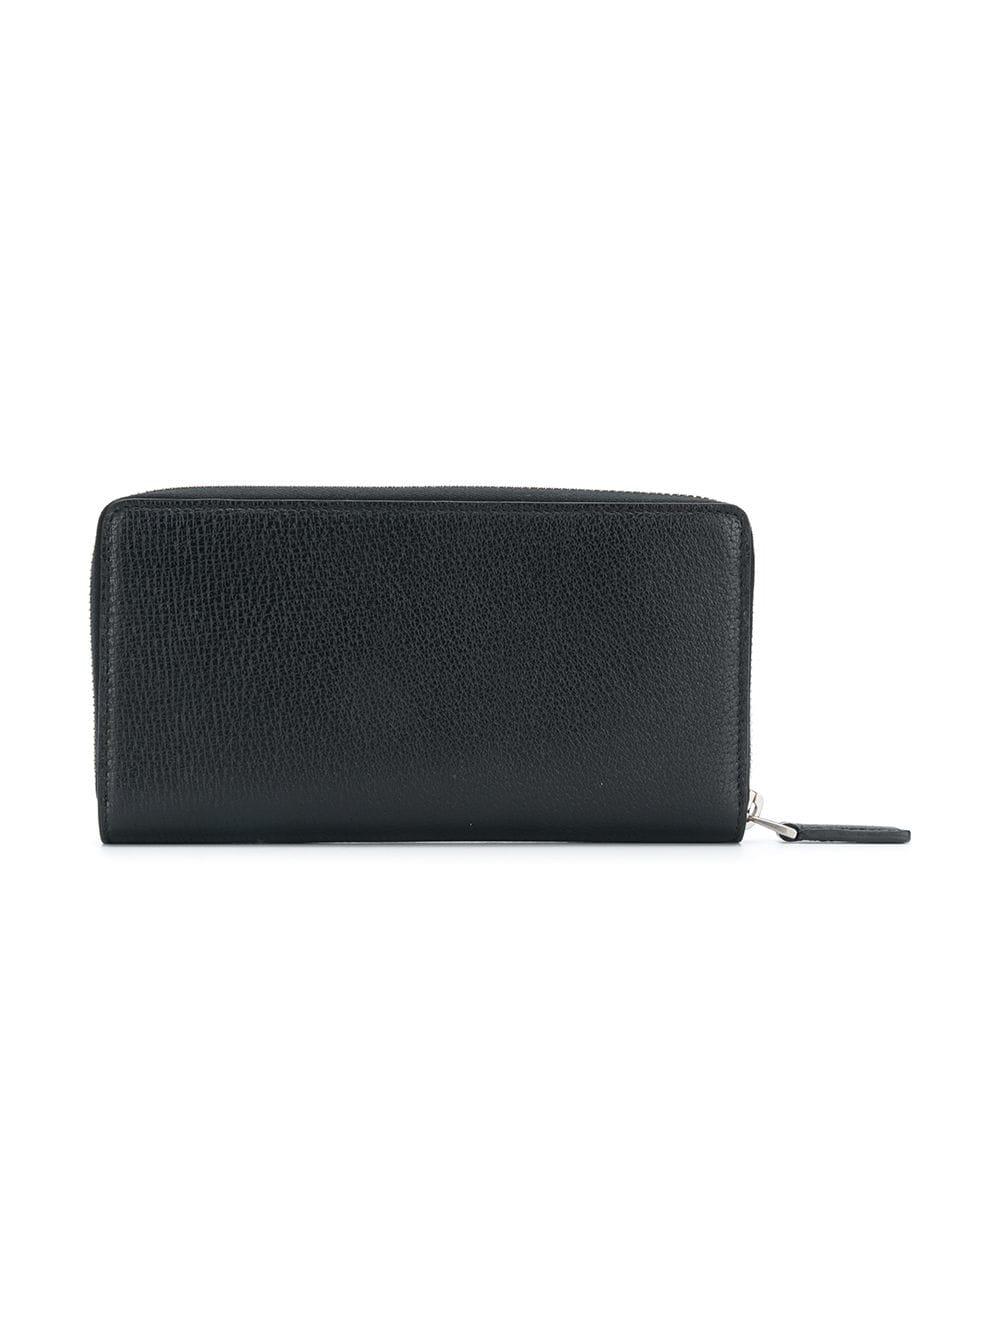 Gucci Gucci Stripe Leather Wallet - Farfetch